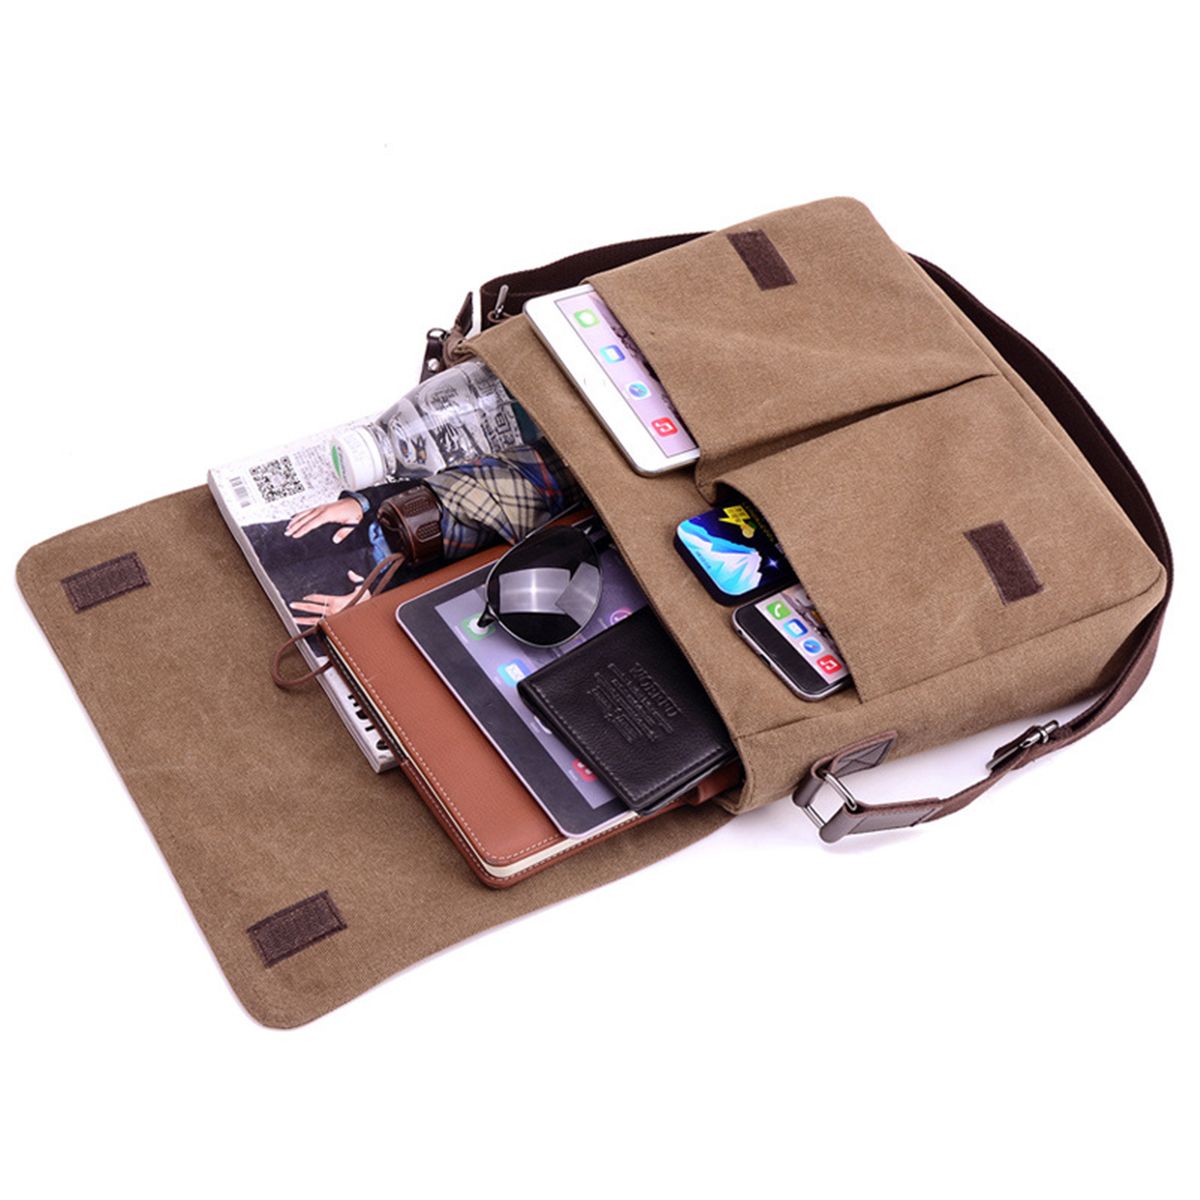 Retro-Men-Canvas-Cross-body-Shoulder-Bags-Laptop-Messenger-Vintage-Travel-School-Bag-1343856